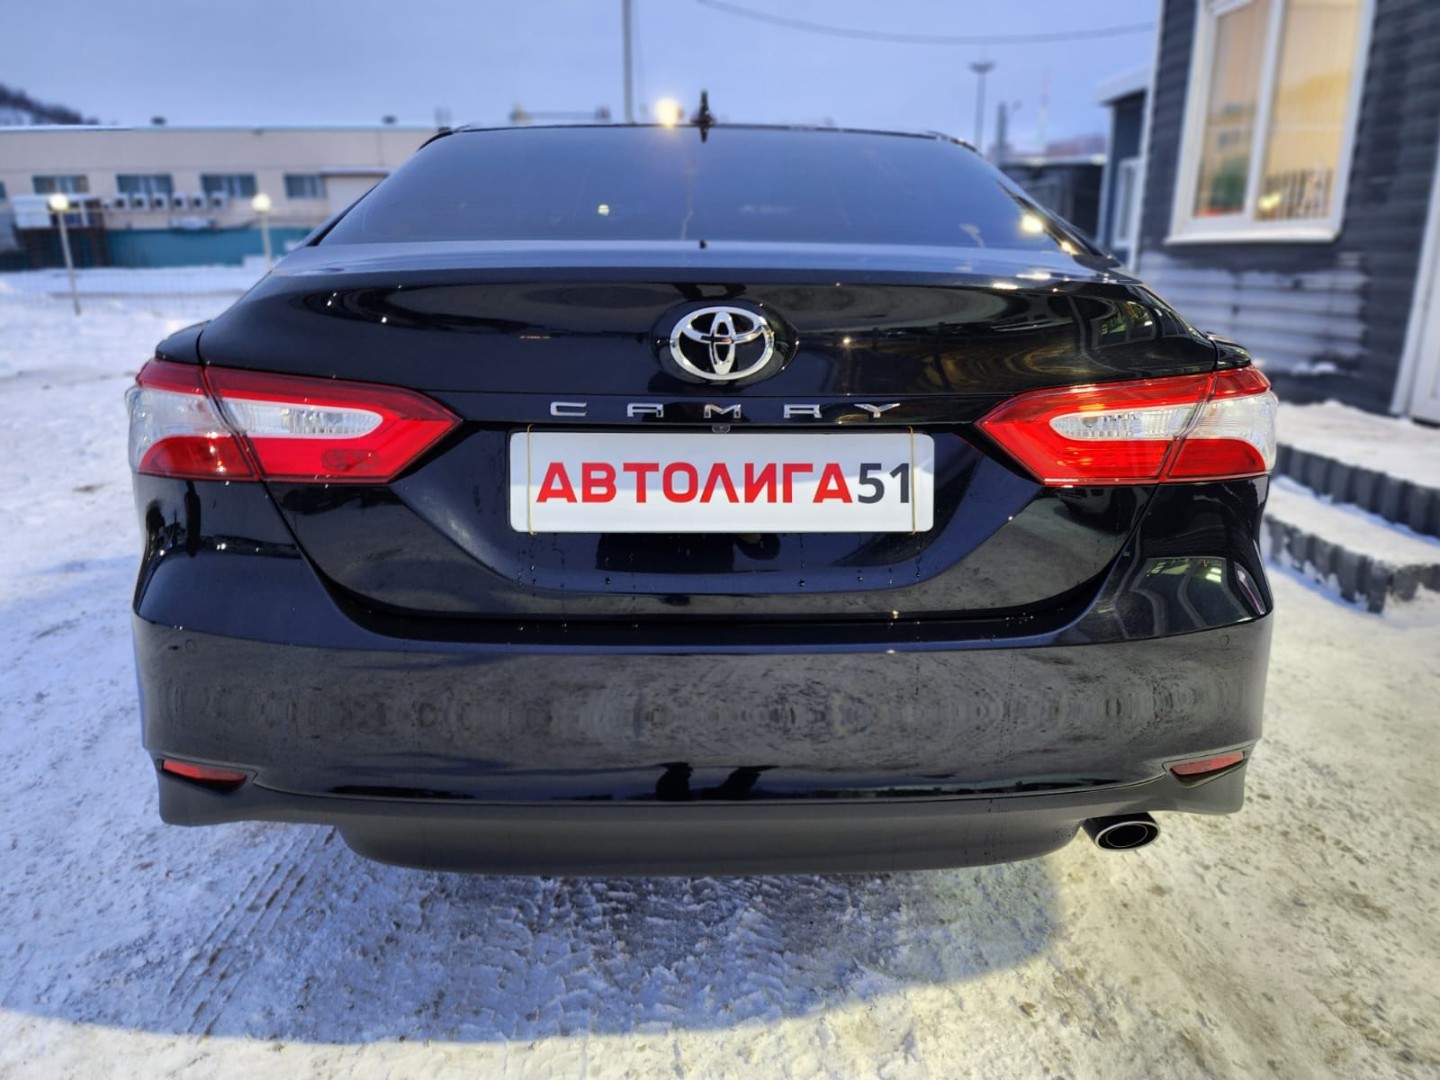 Toyota Camry, 2021 г.в., пробег 5 770 км, цена, фото, Мурманск